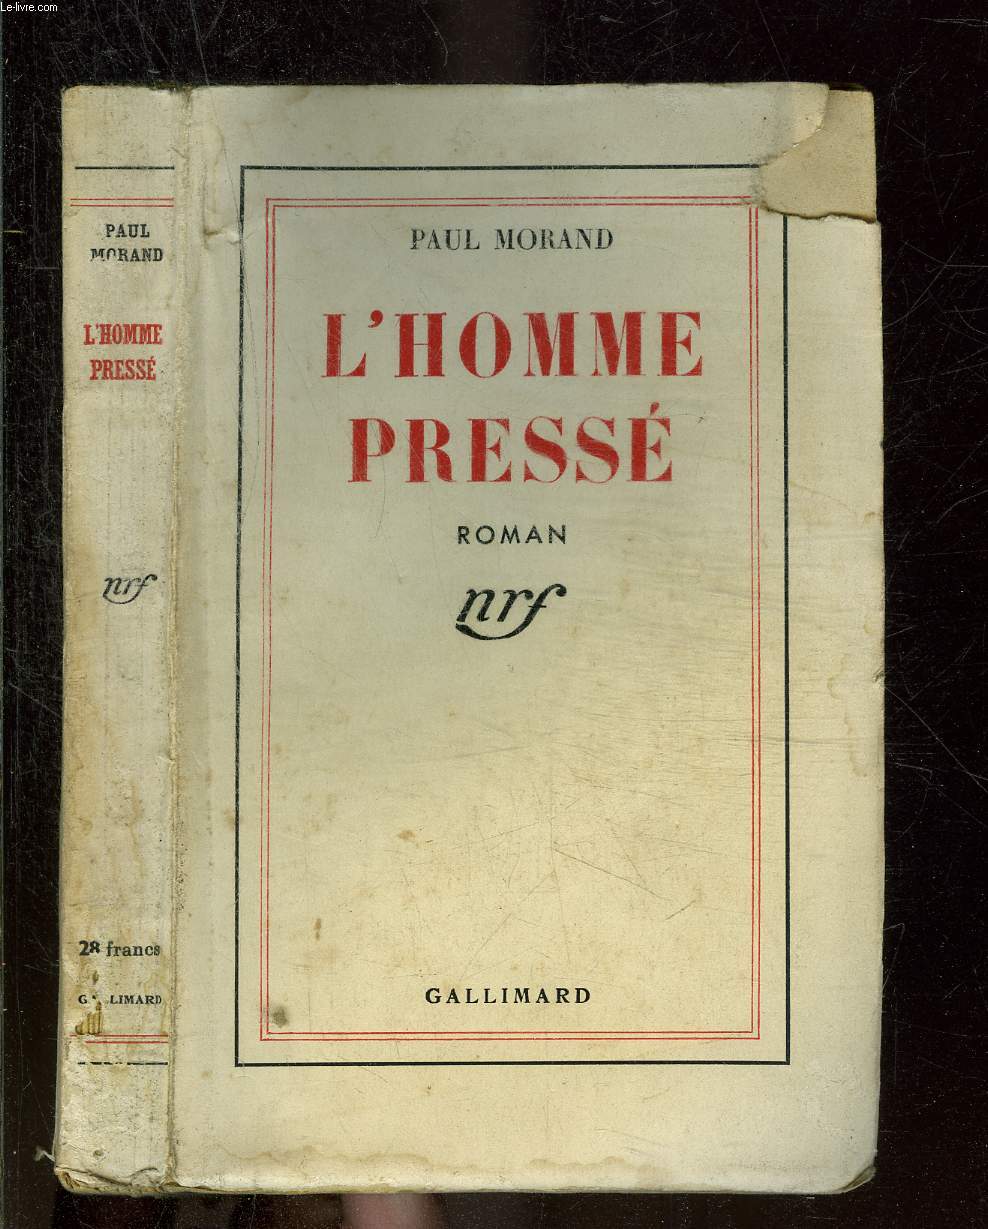 L'HOMME PRESSE